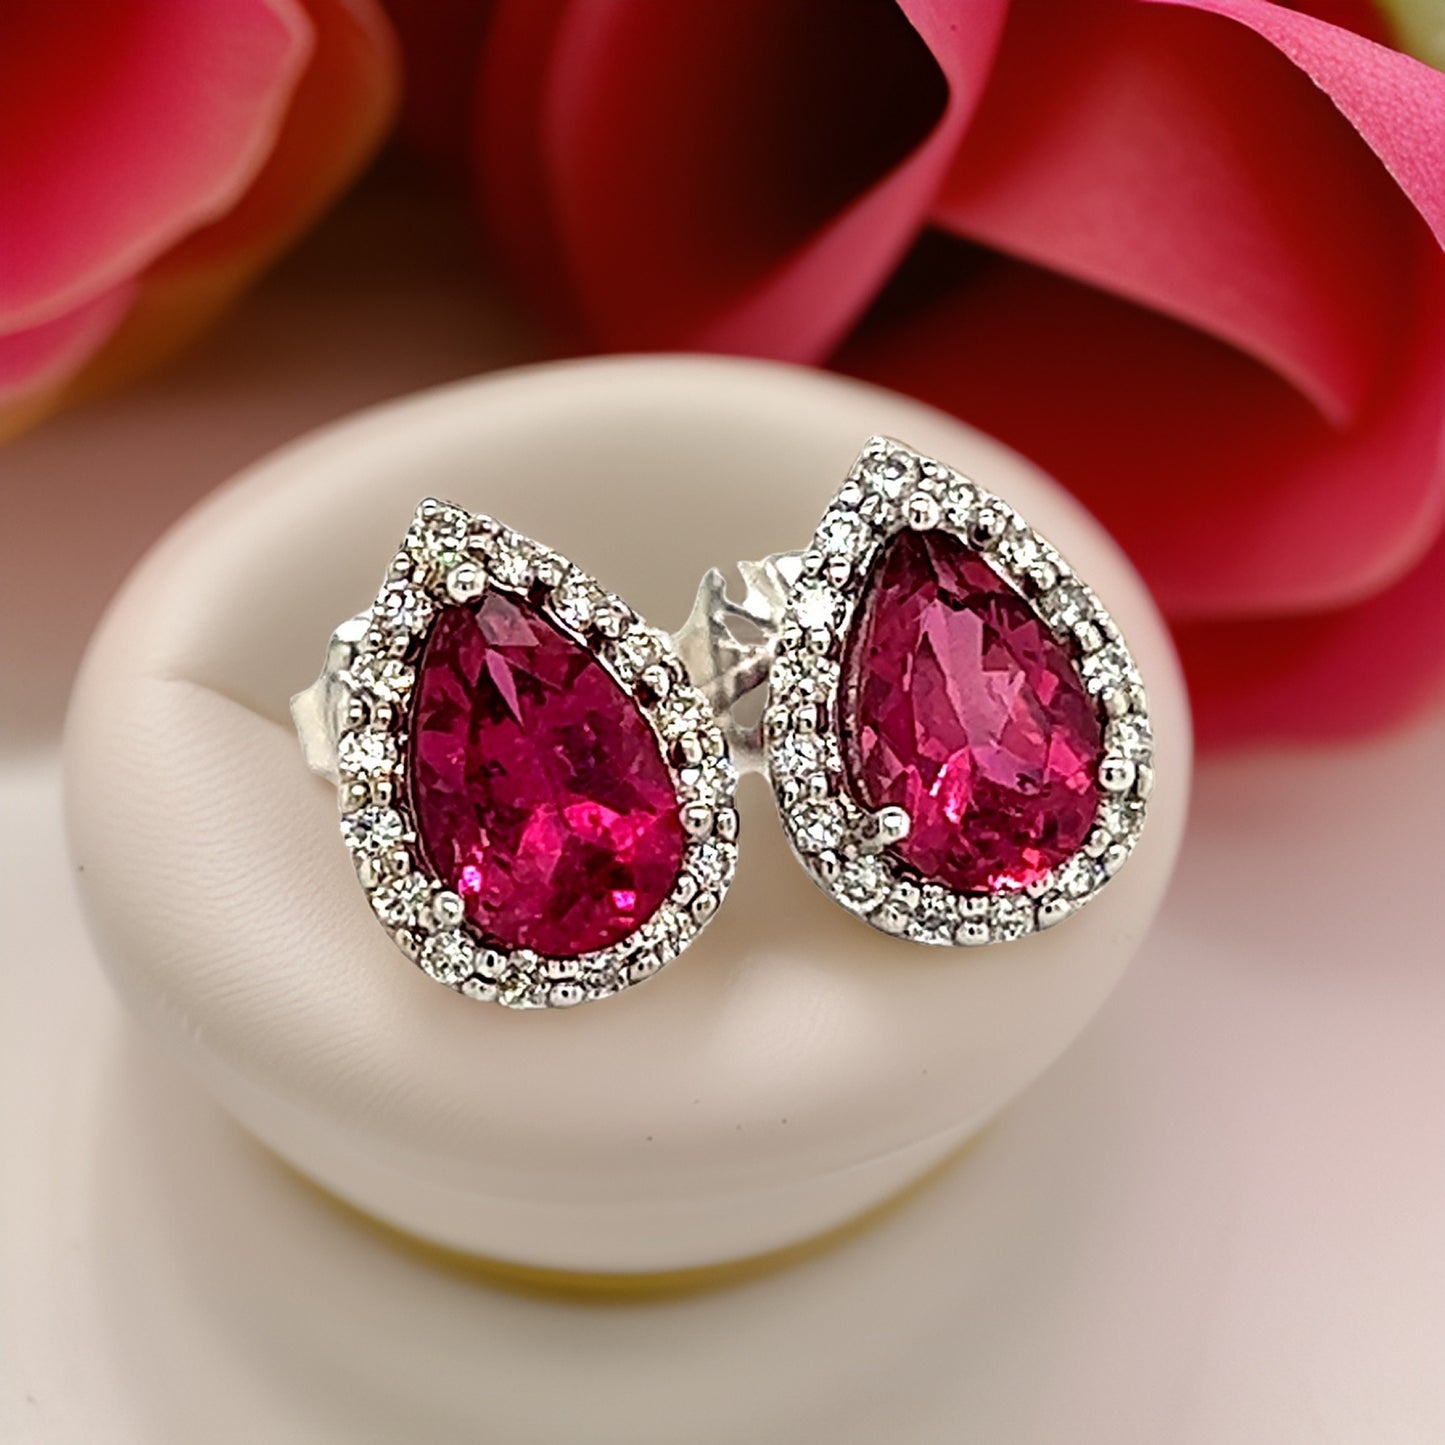 Natural Pink Tourmaline Diamond Stud Earrings 14k W Gold 2.02 TCW Certified $3,950 211890